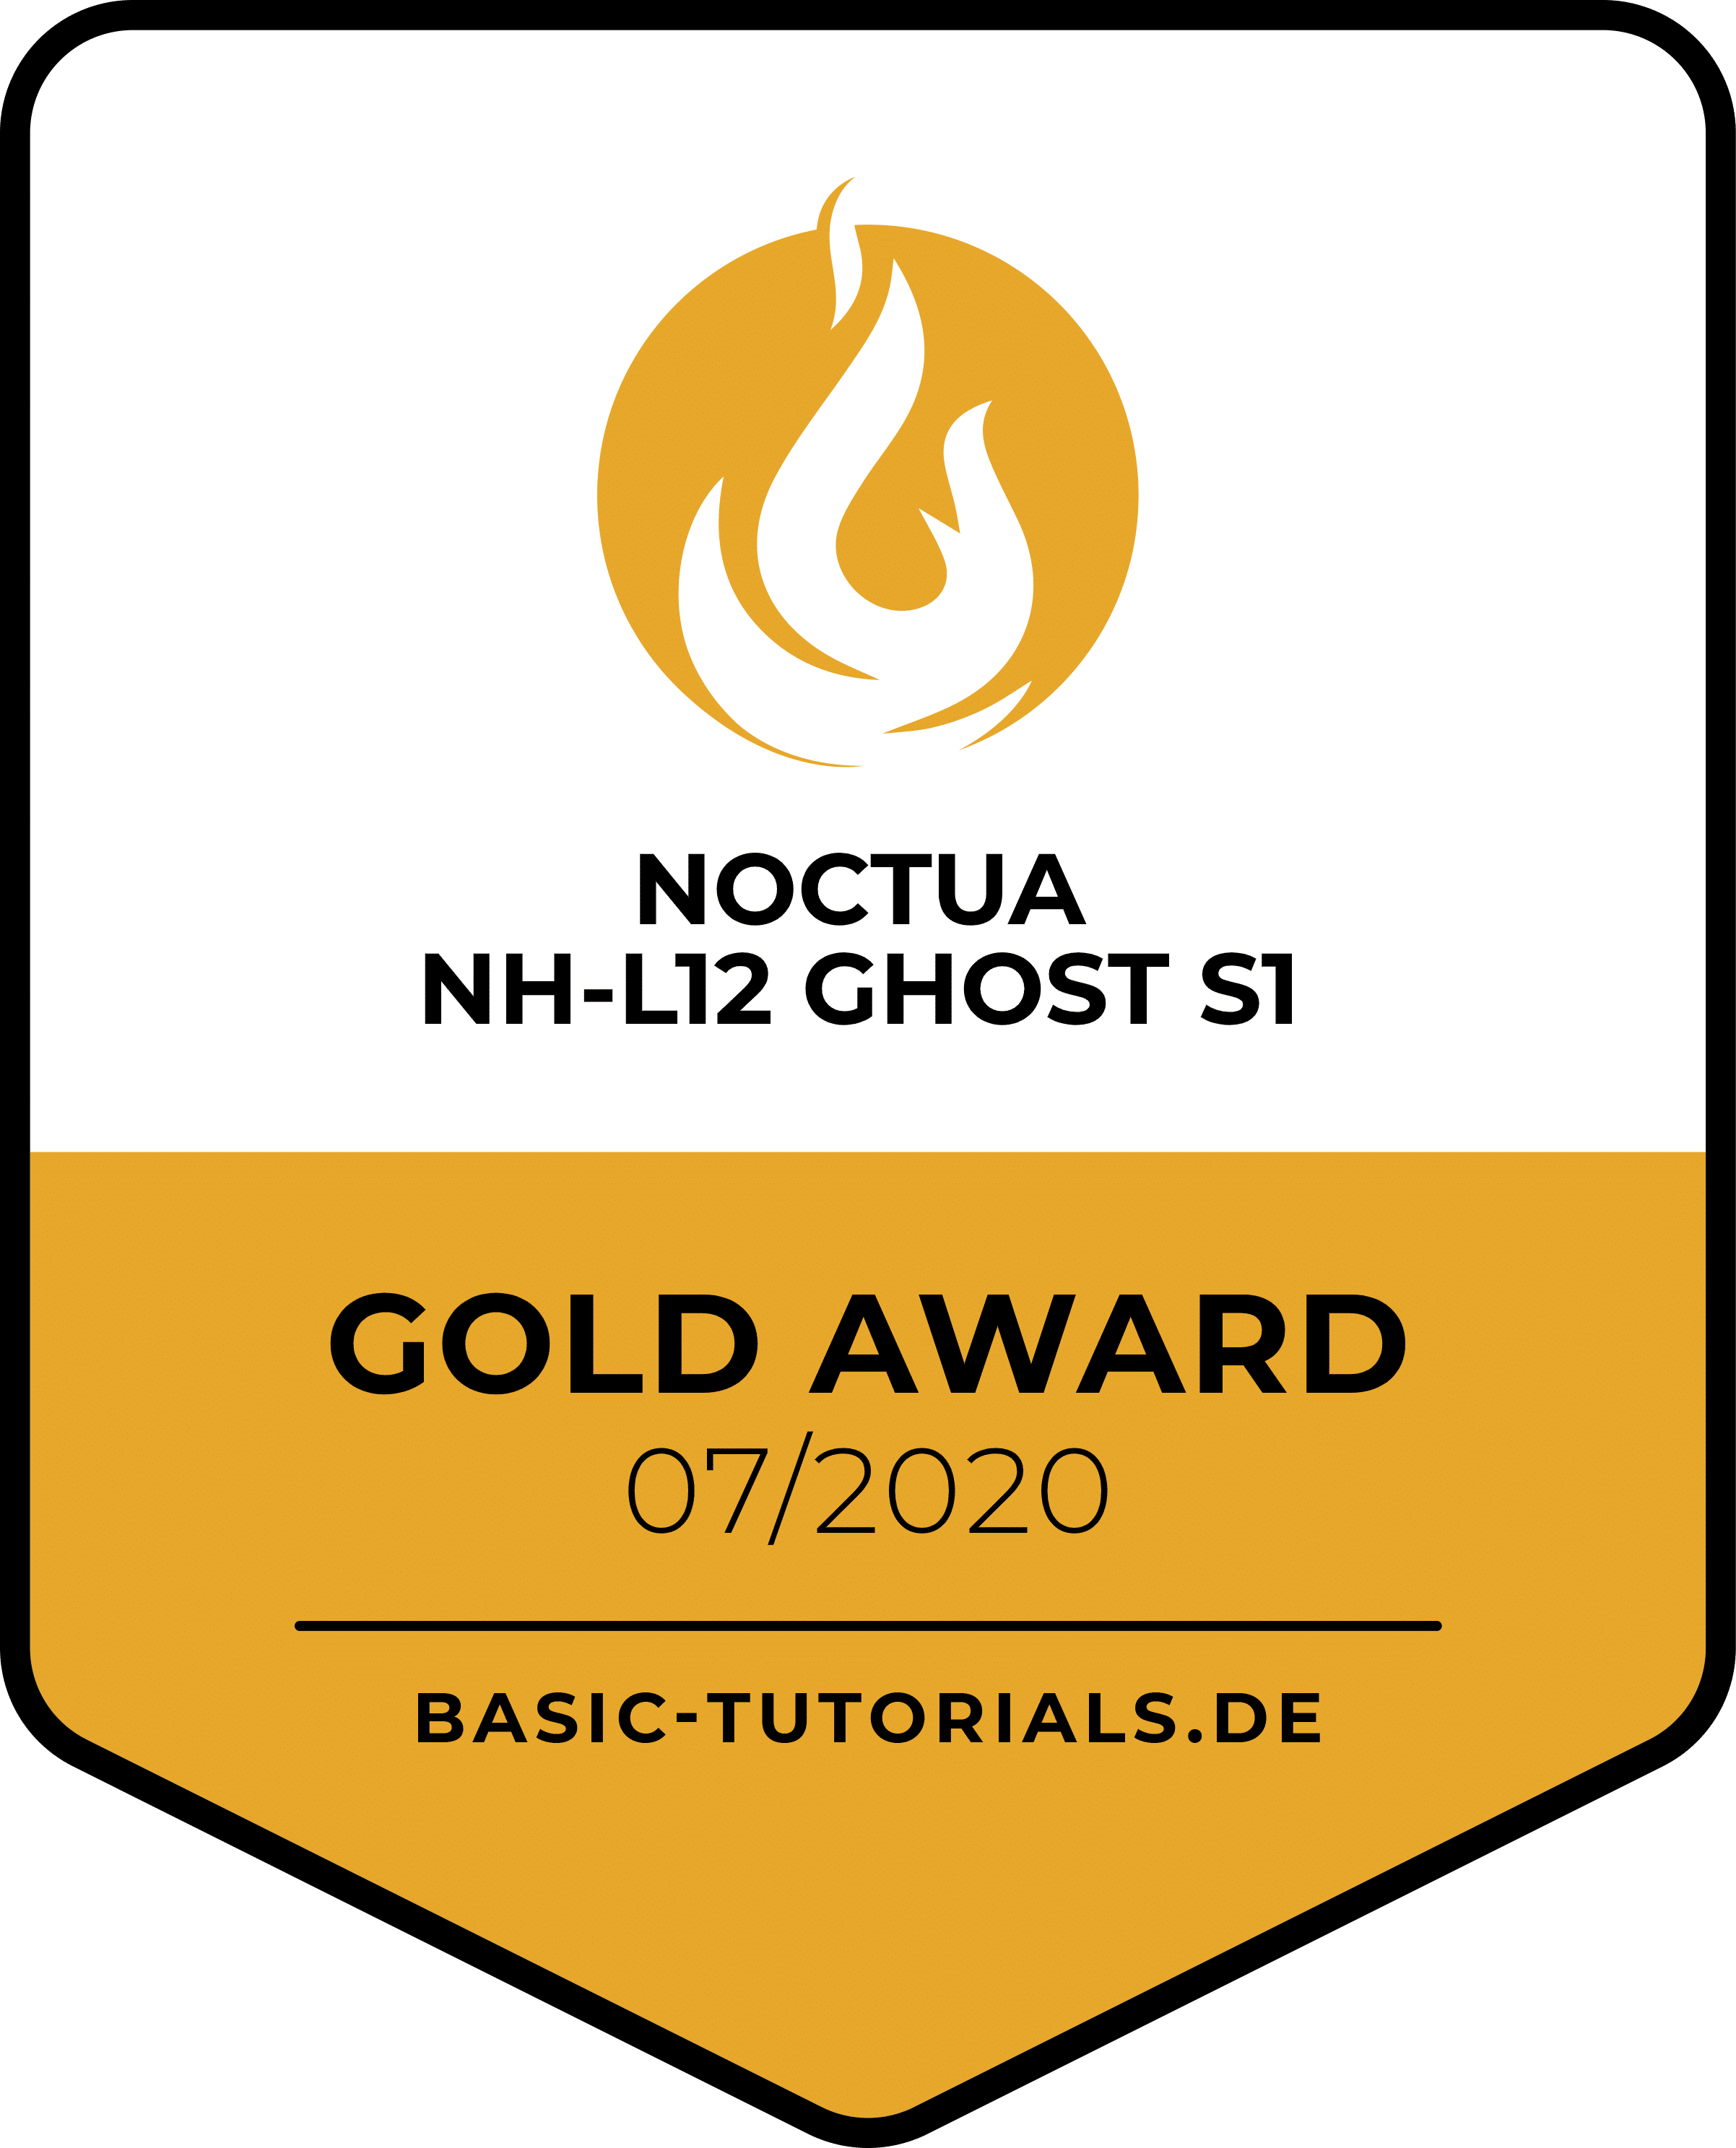 NO NHL12 GHOSTS1: Noctua NH-L12 Ghost S1 CPU cooler at reichelt elektronik